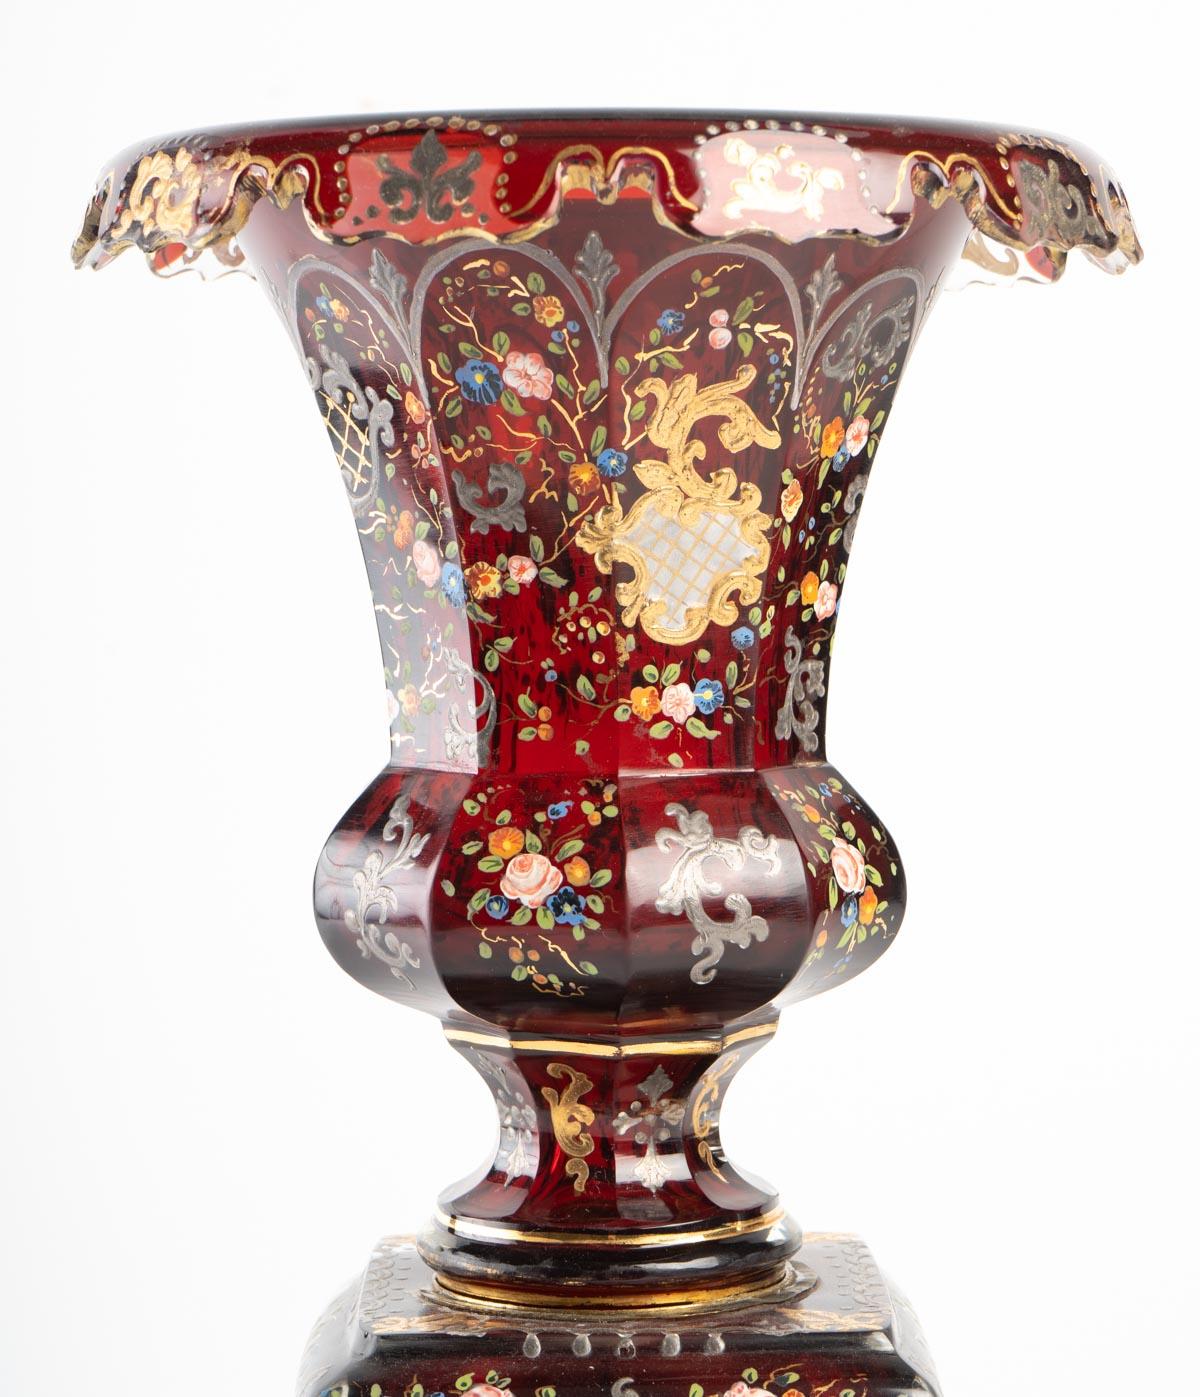 Bohemian vase, enameled gold-silver, 19th century, Napoleon III.
Measures: H 31 cm, W 13 cm, D 12 cm.